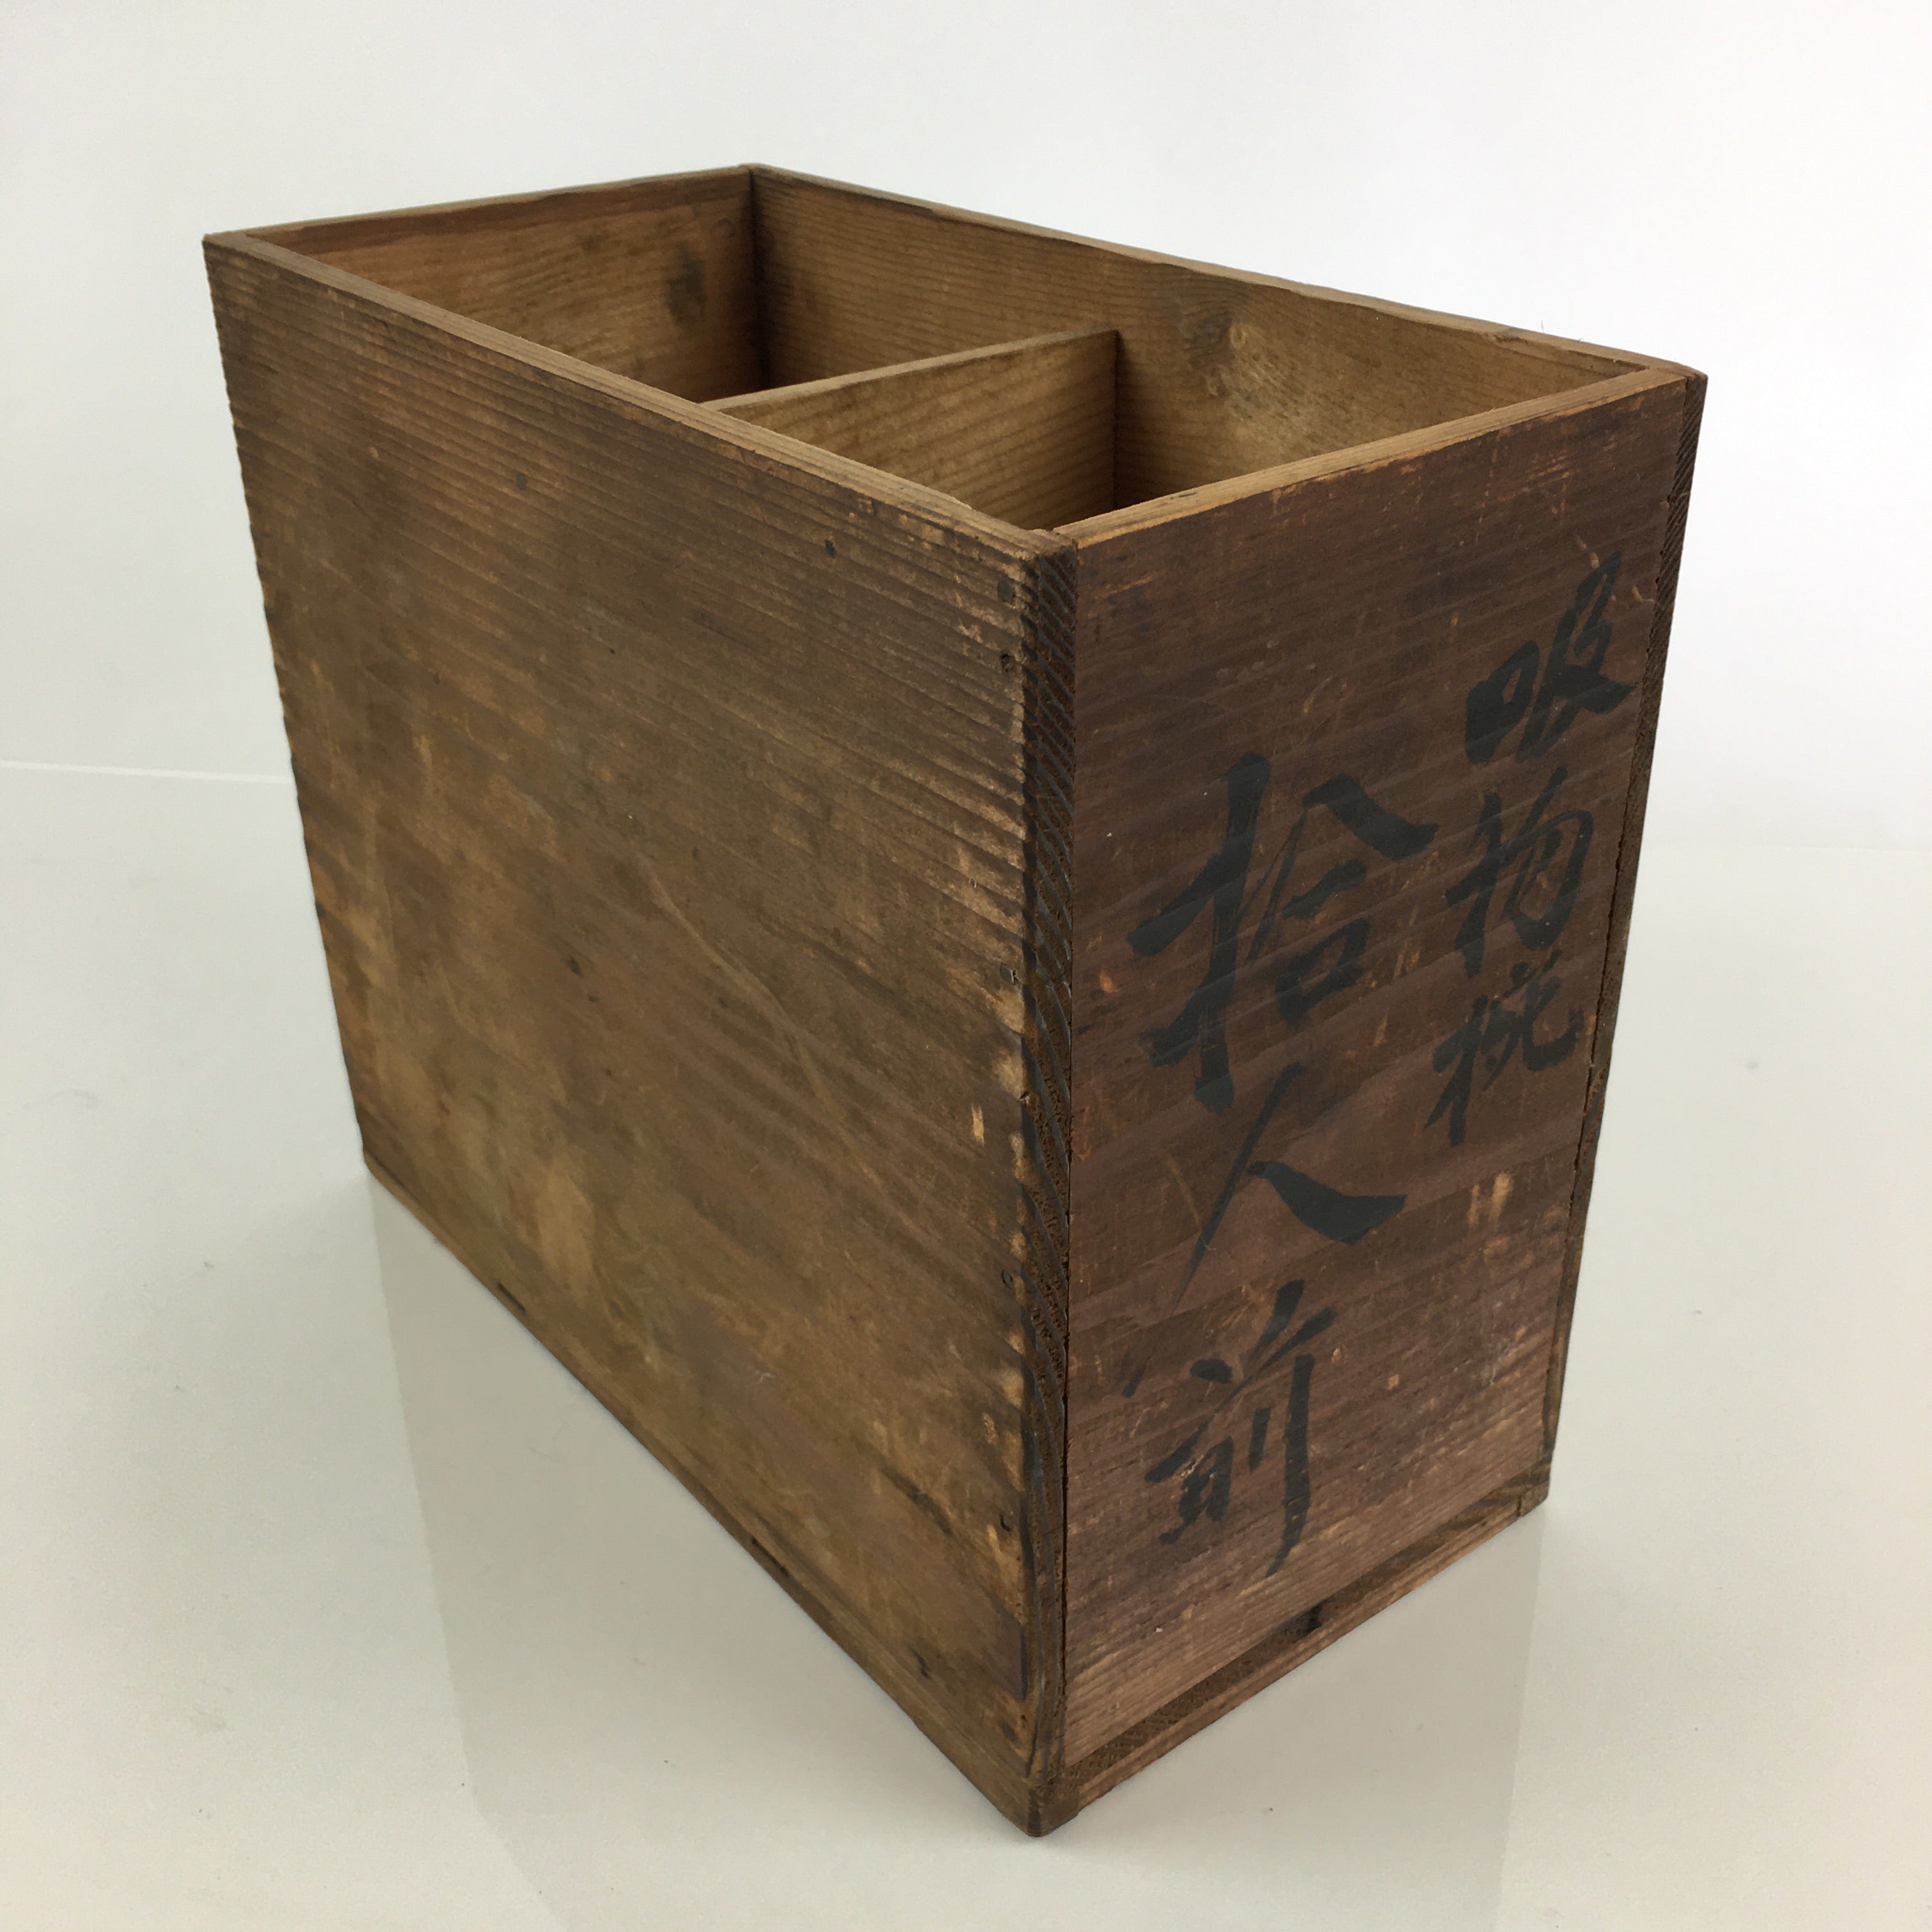 Vintage Japanese Wooden Pottery Storage Box Inside 26.5x13x22.5cm WB997